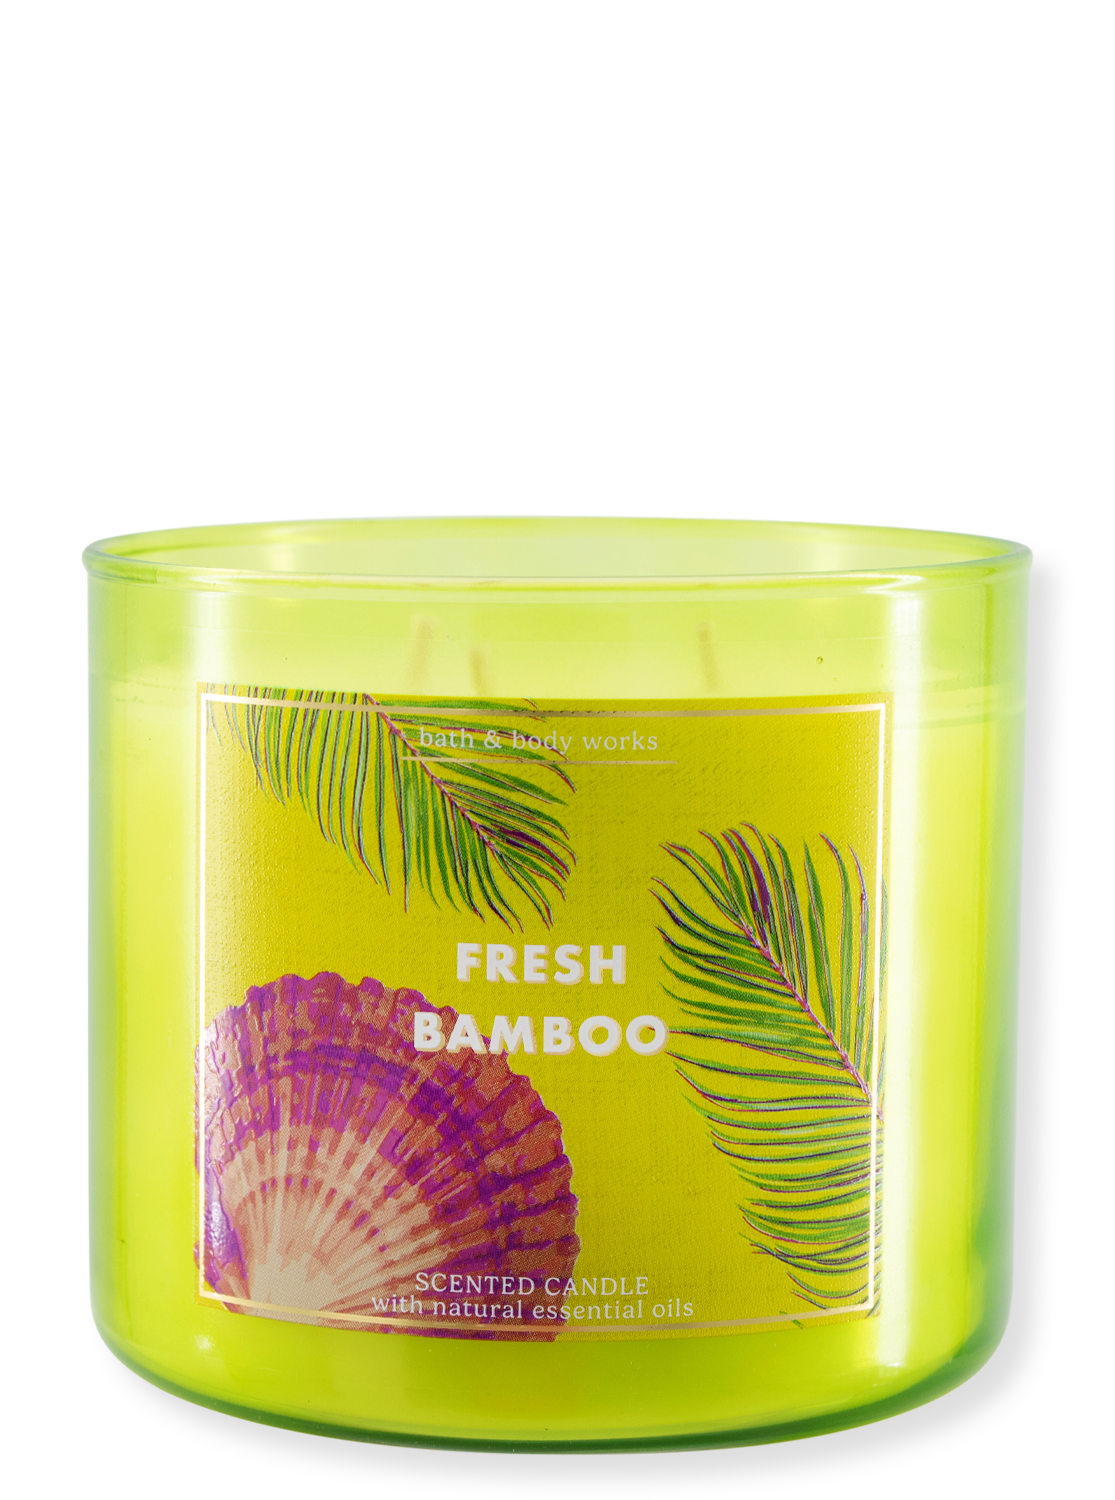 3 -f Candle - Bamboo frais - 411G